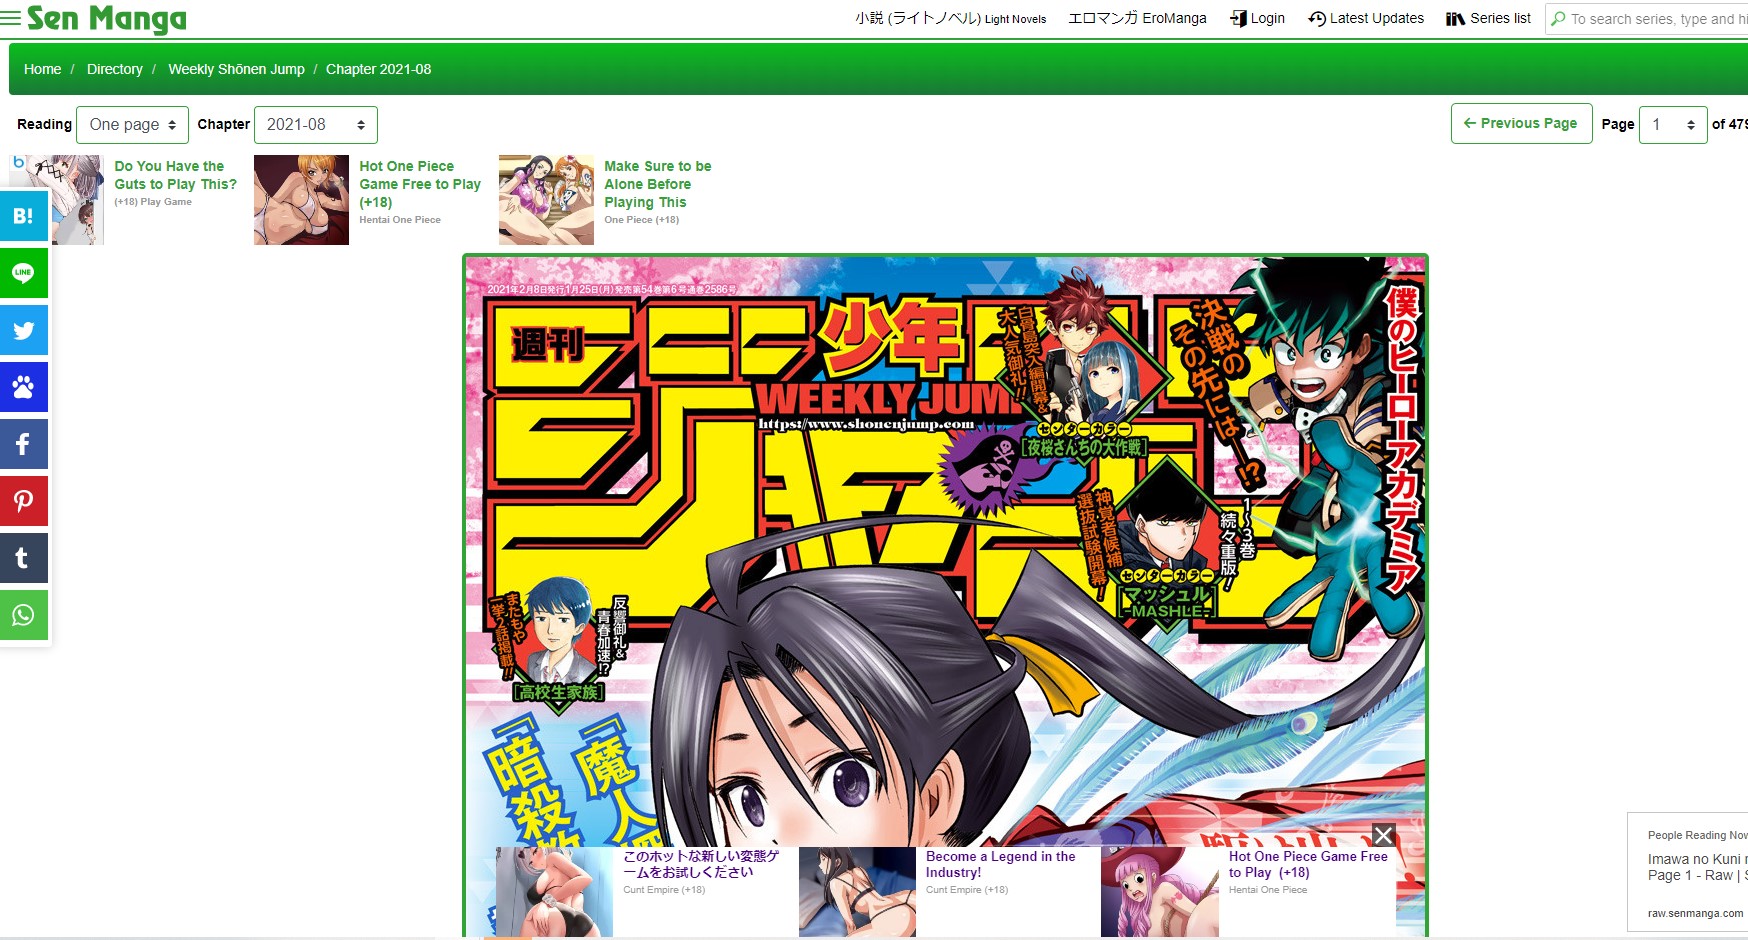 「Sen Manga」は日本語で読めるか使い方を解説